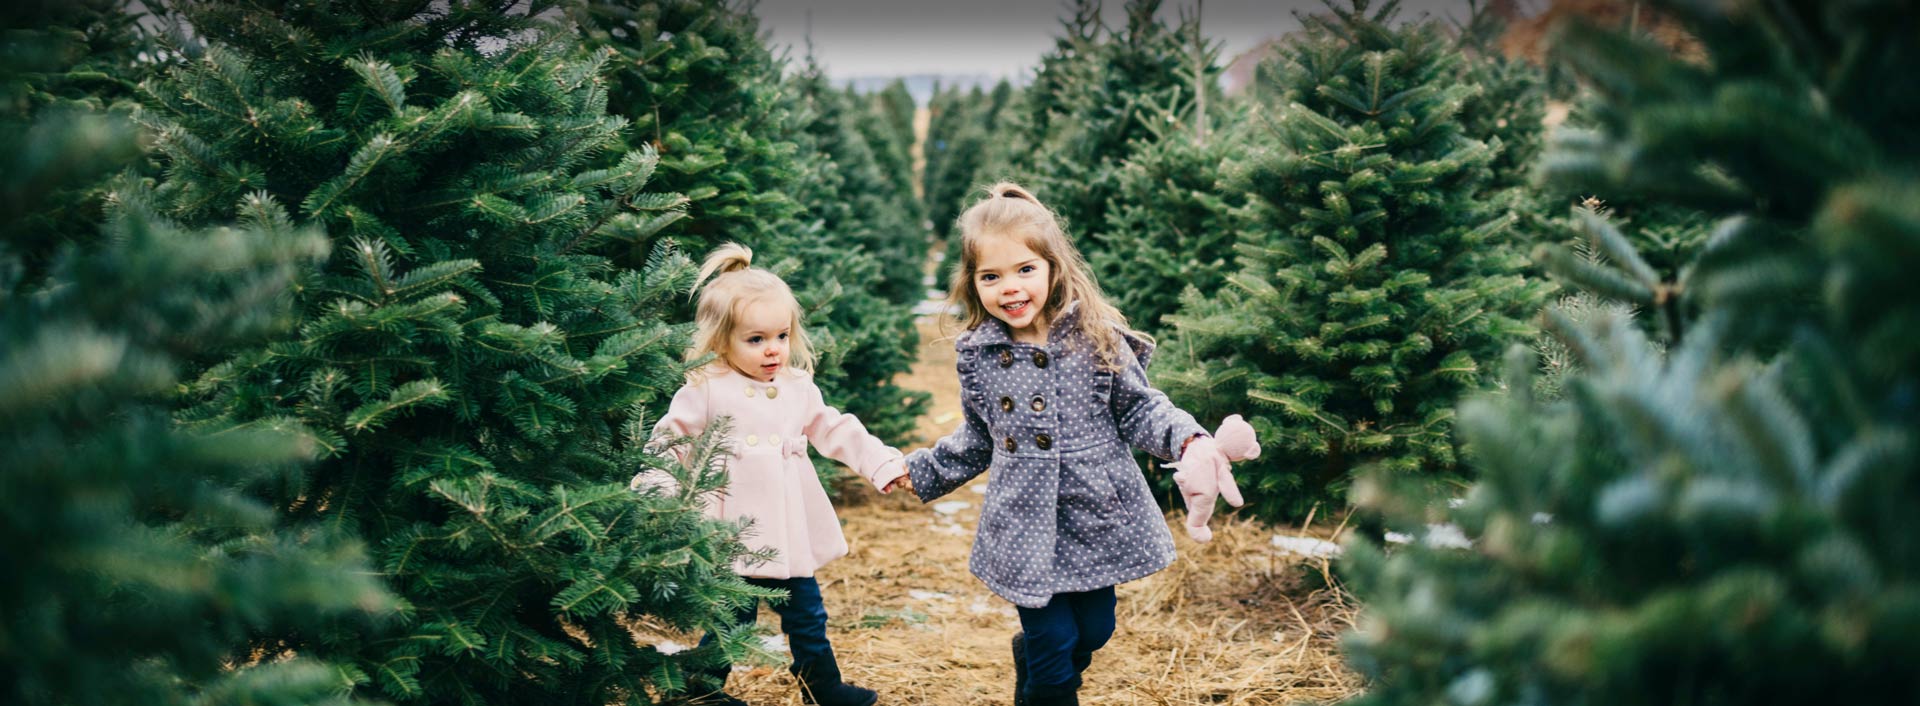 Retail Christmas Trees